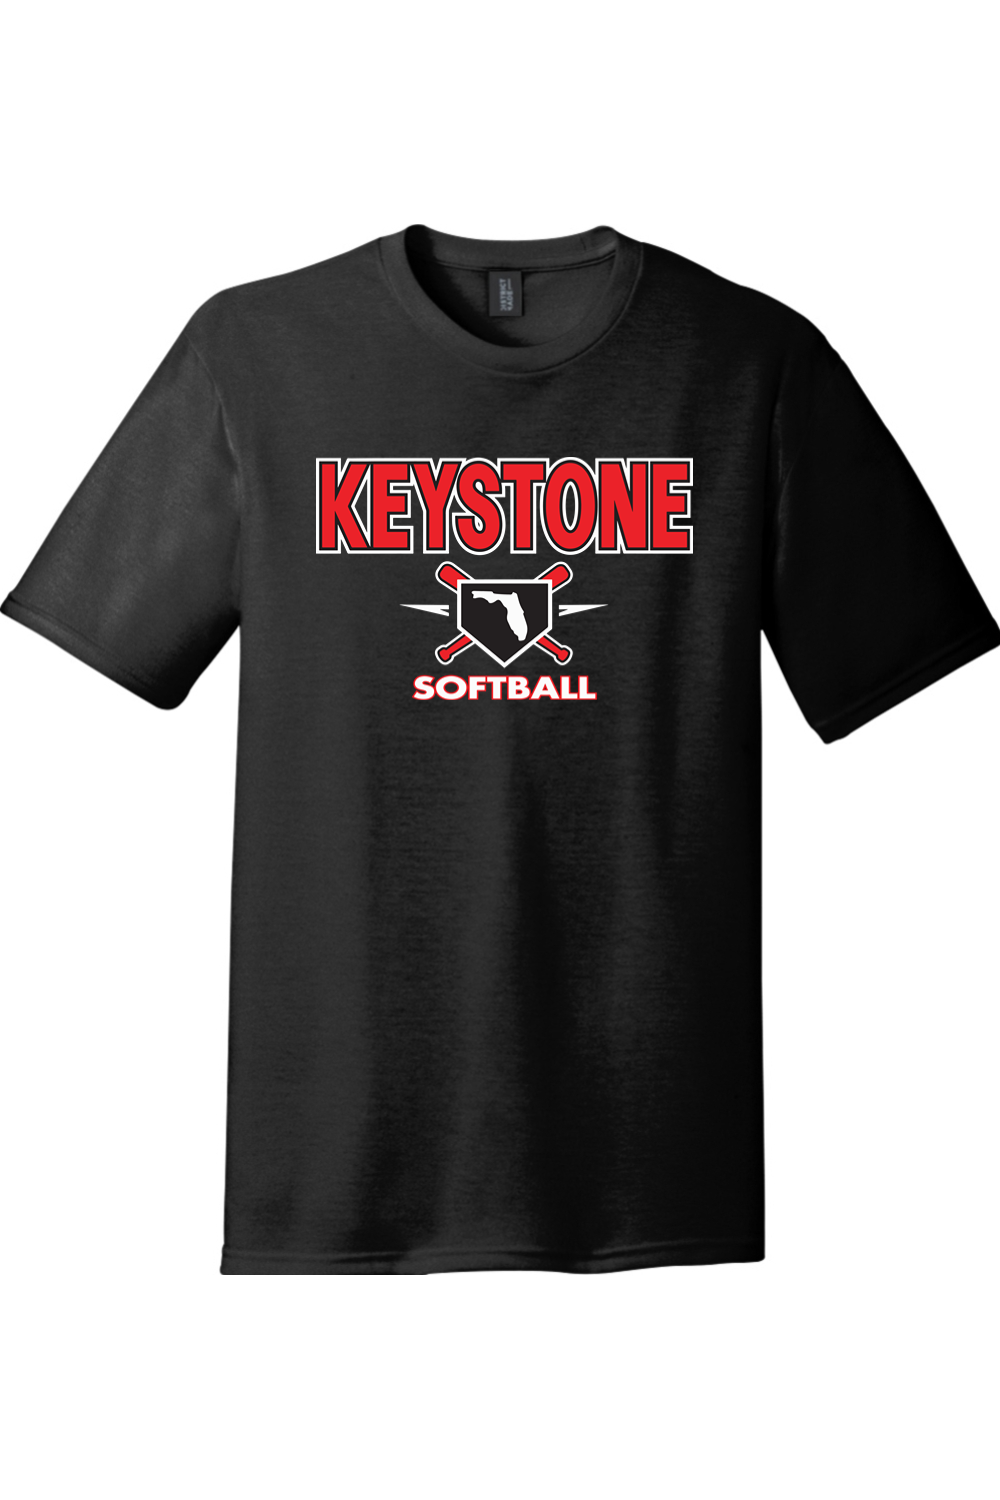 Keystone Softball Perfect Tri Tee